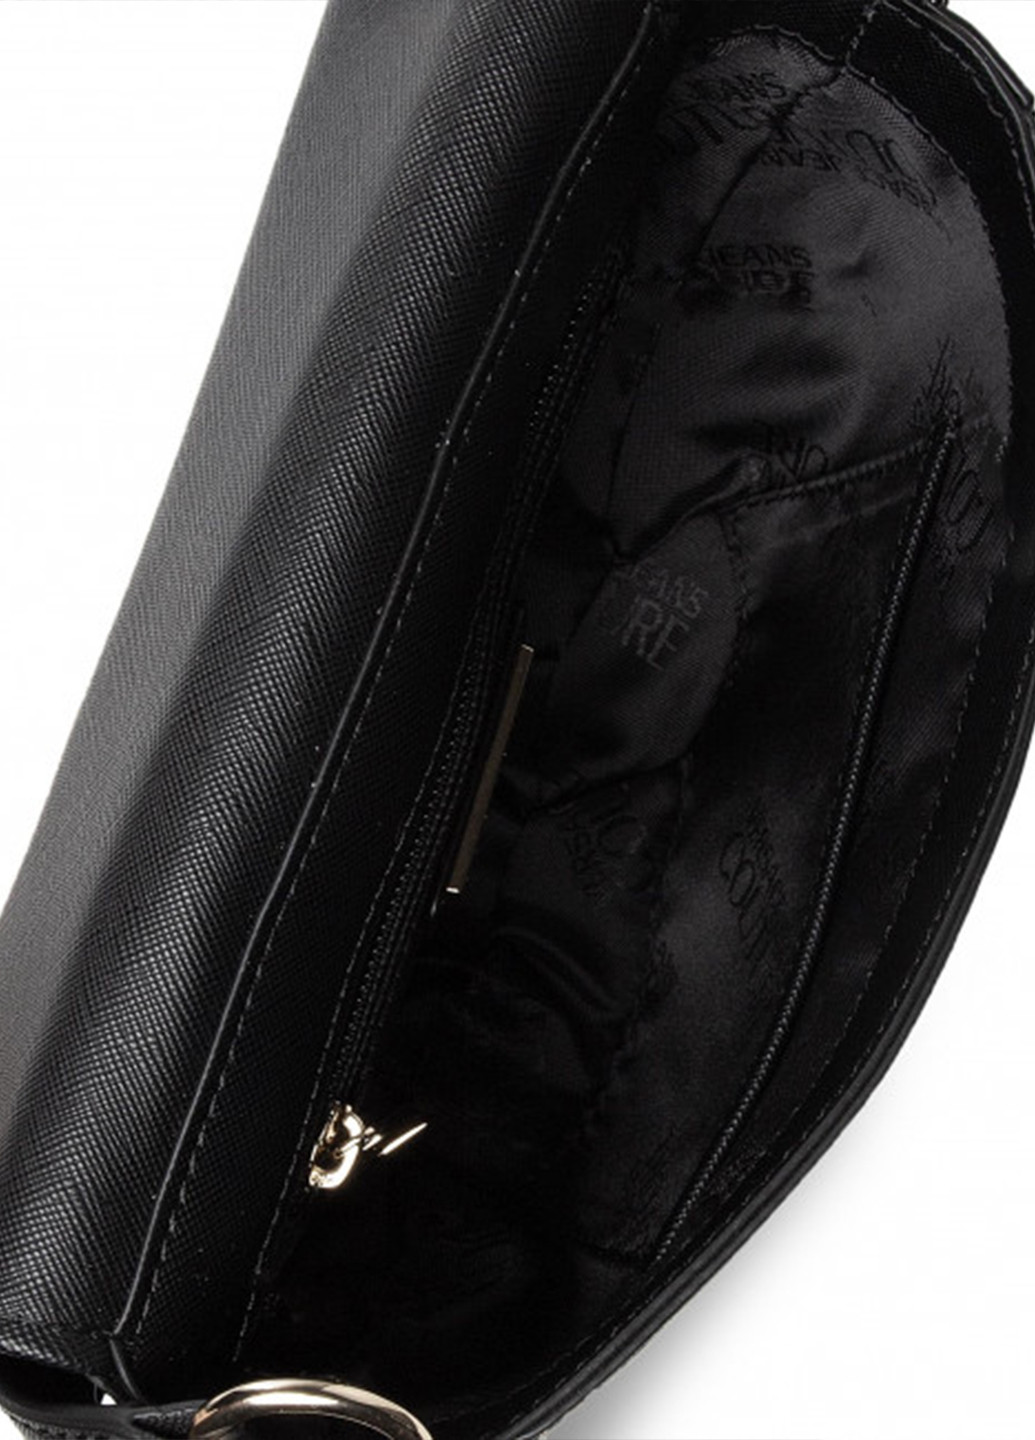 Couture 71VA4BF2 Черный Versace Jeans (266416719)